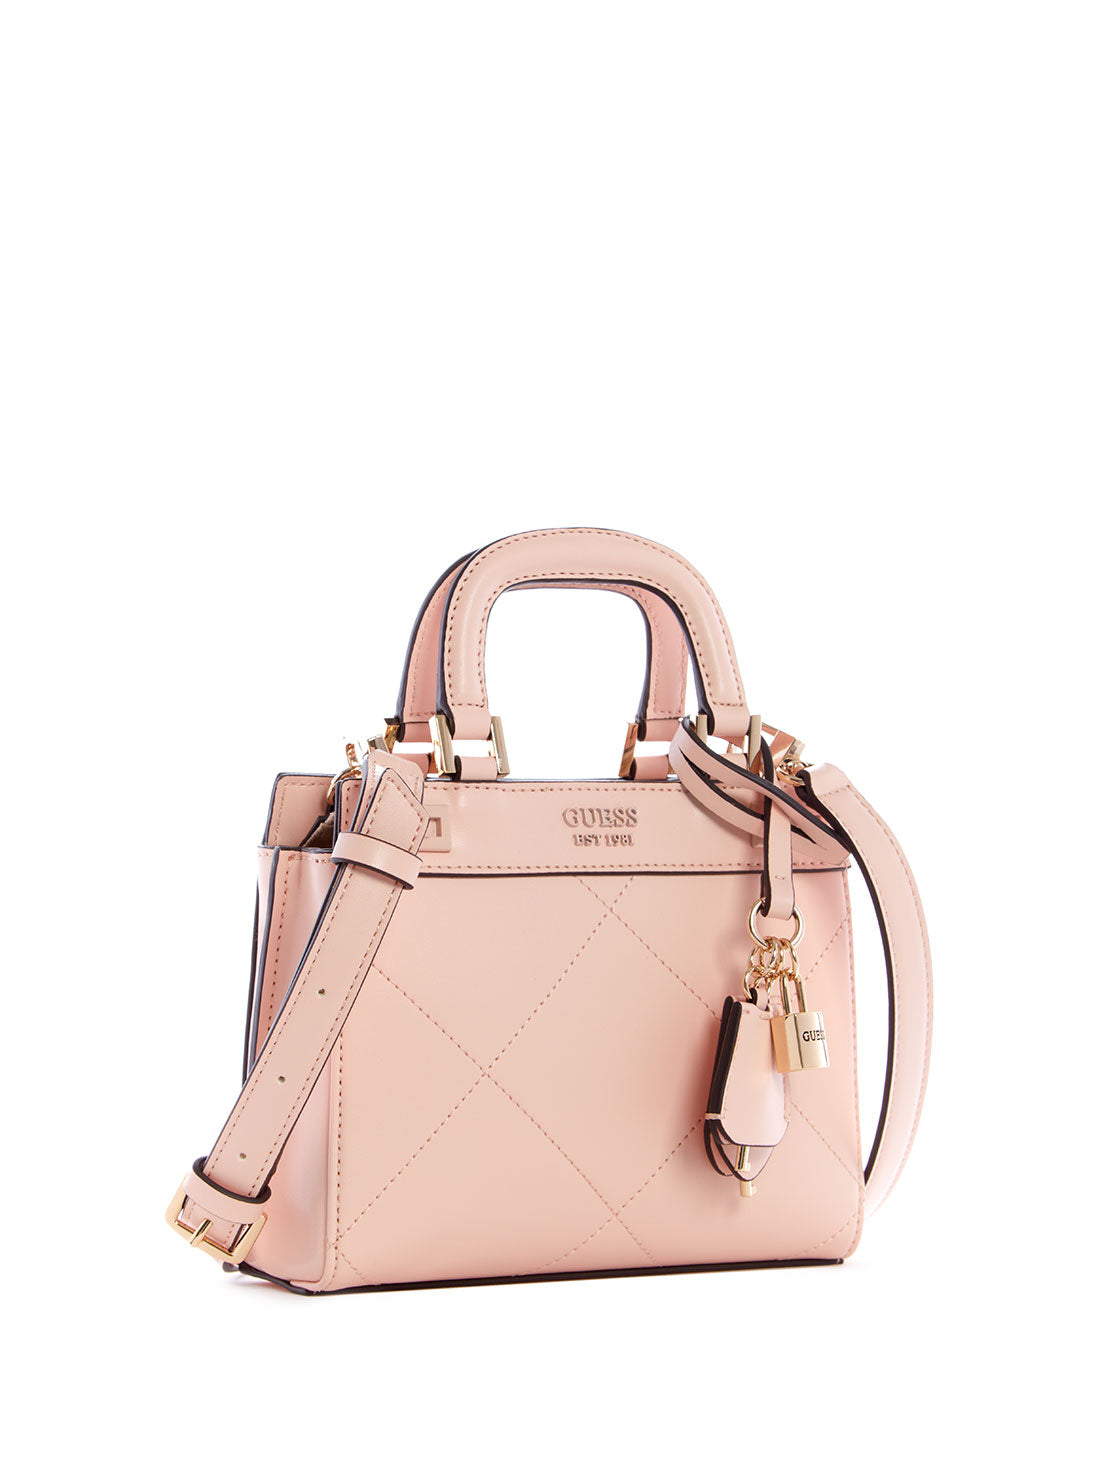 GUESS Women's Pink Katey Mini Satchel Bag QP787076 Front Side View